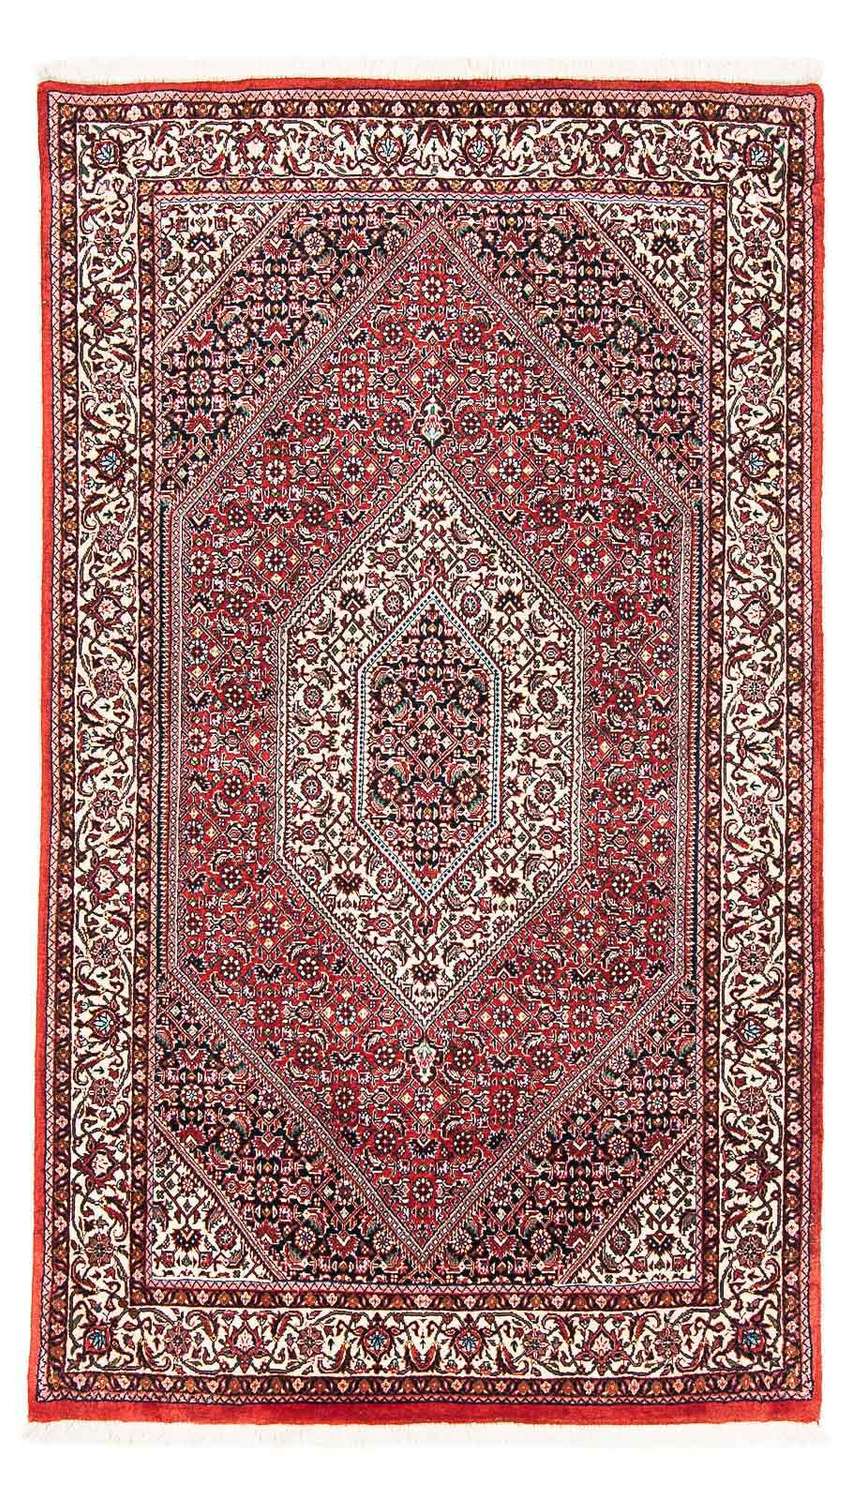 Persisk teppe - Bijar - 178 x 108 cm - rød